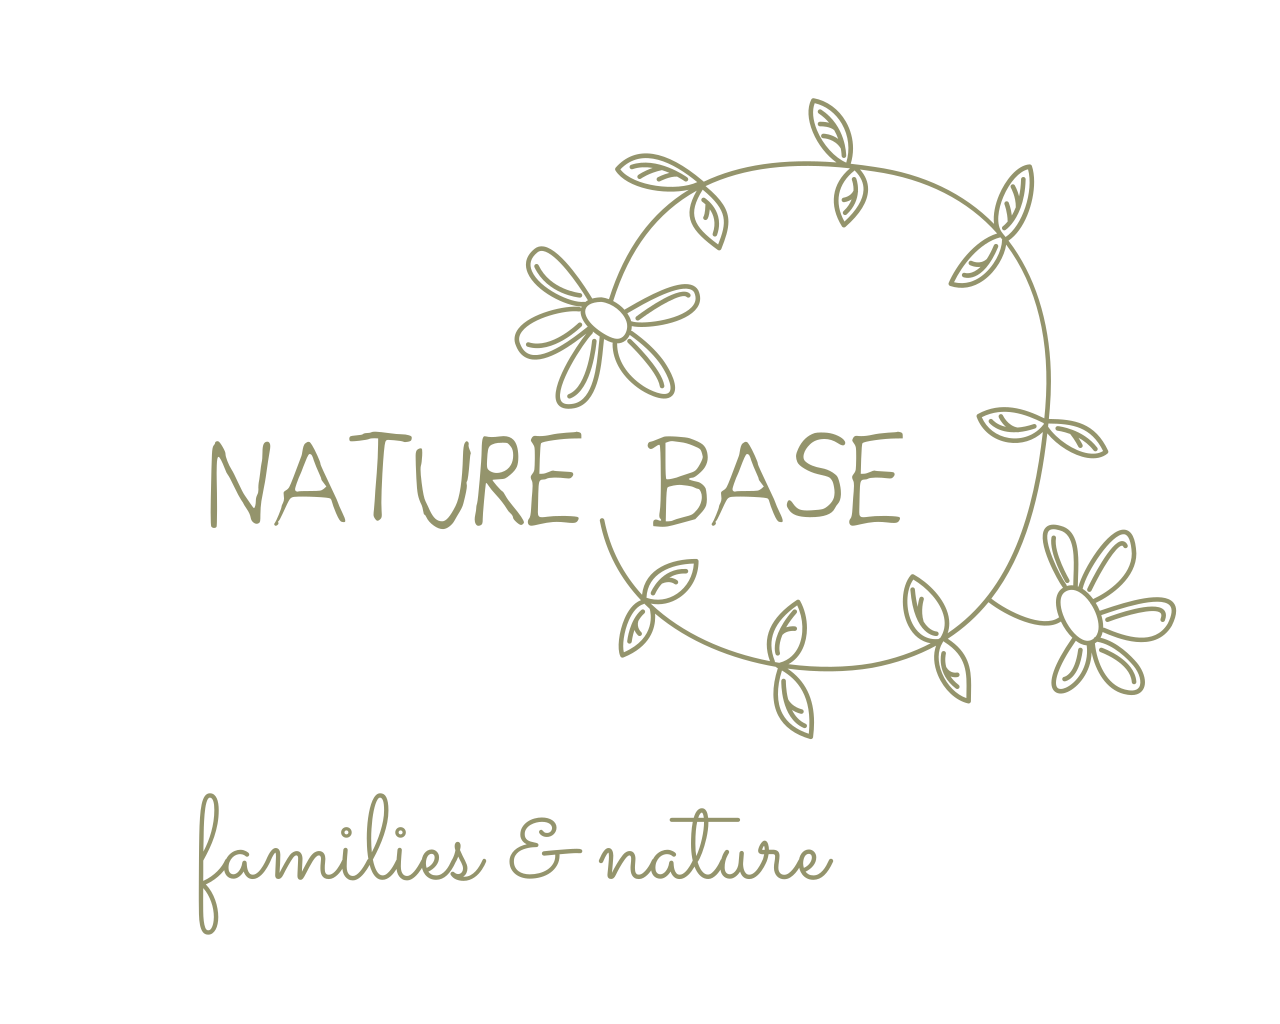 Nature base